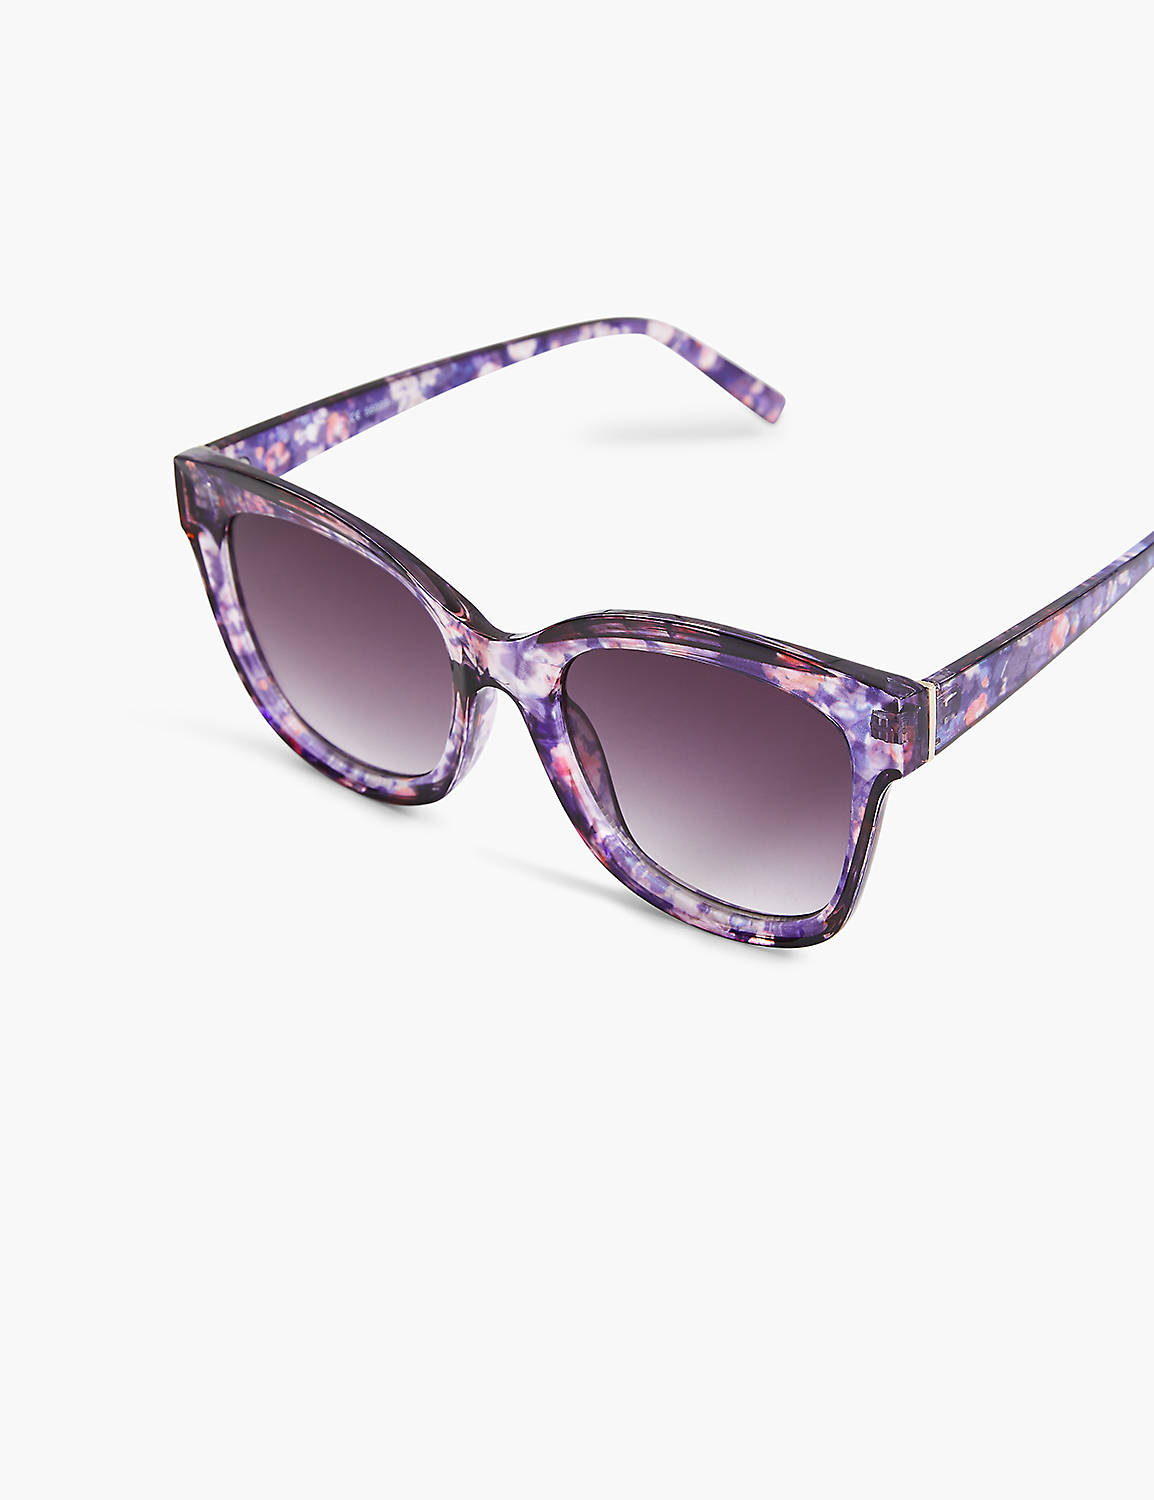 Purple Floral Cat Eye Sunglasses Product Image 1